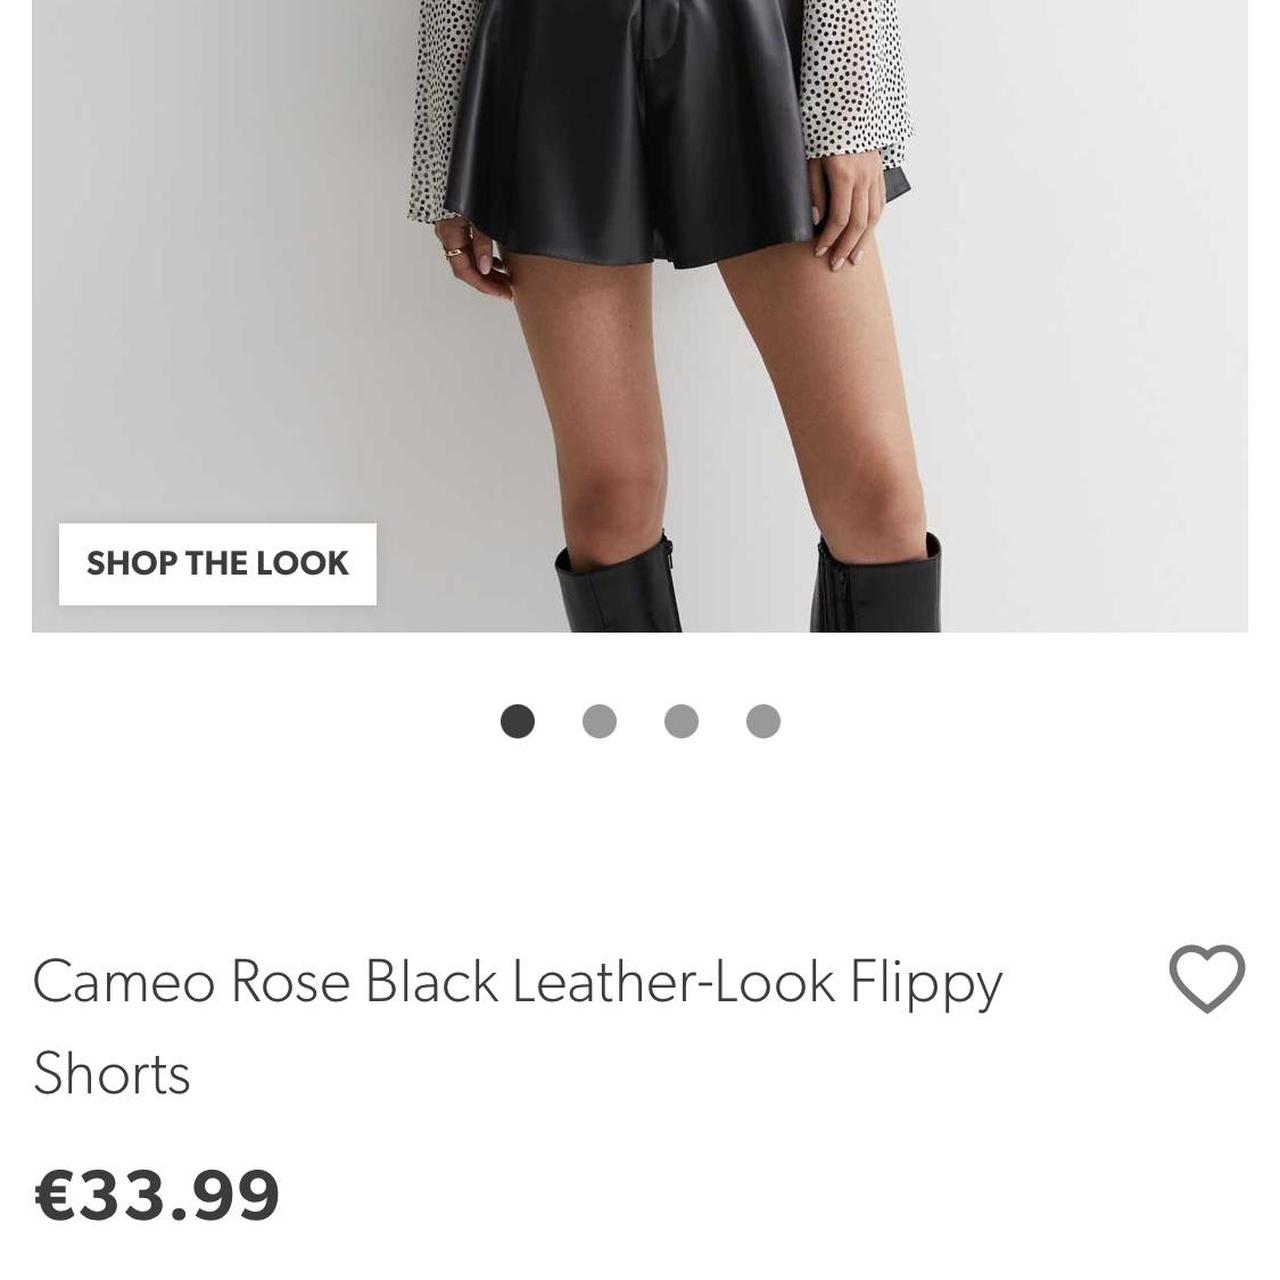 Cameo Rose Black Leather-Look Flippy Shorts